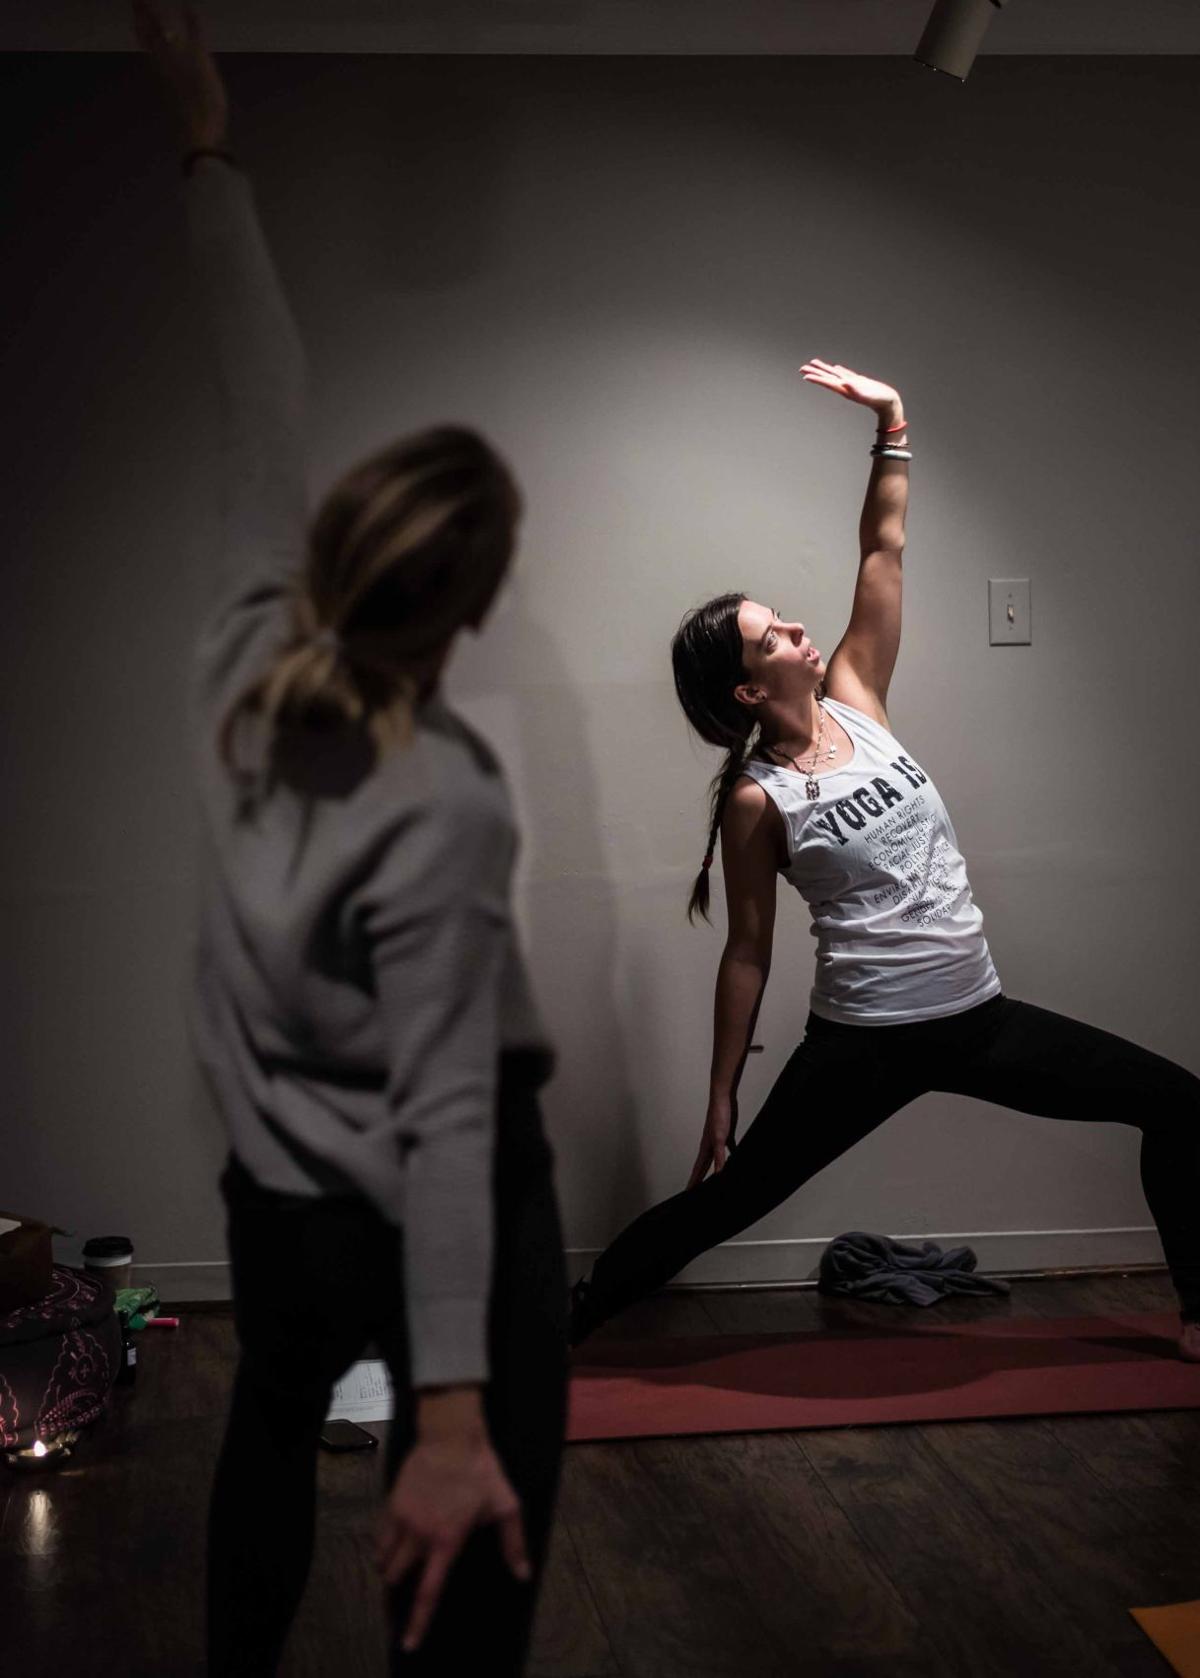 Winston-Salem yoga teacher offers yoga co-op | Business | journalnow.com